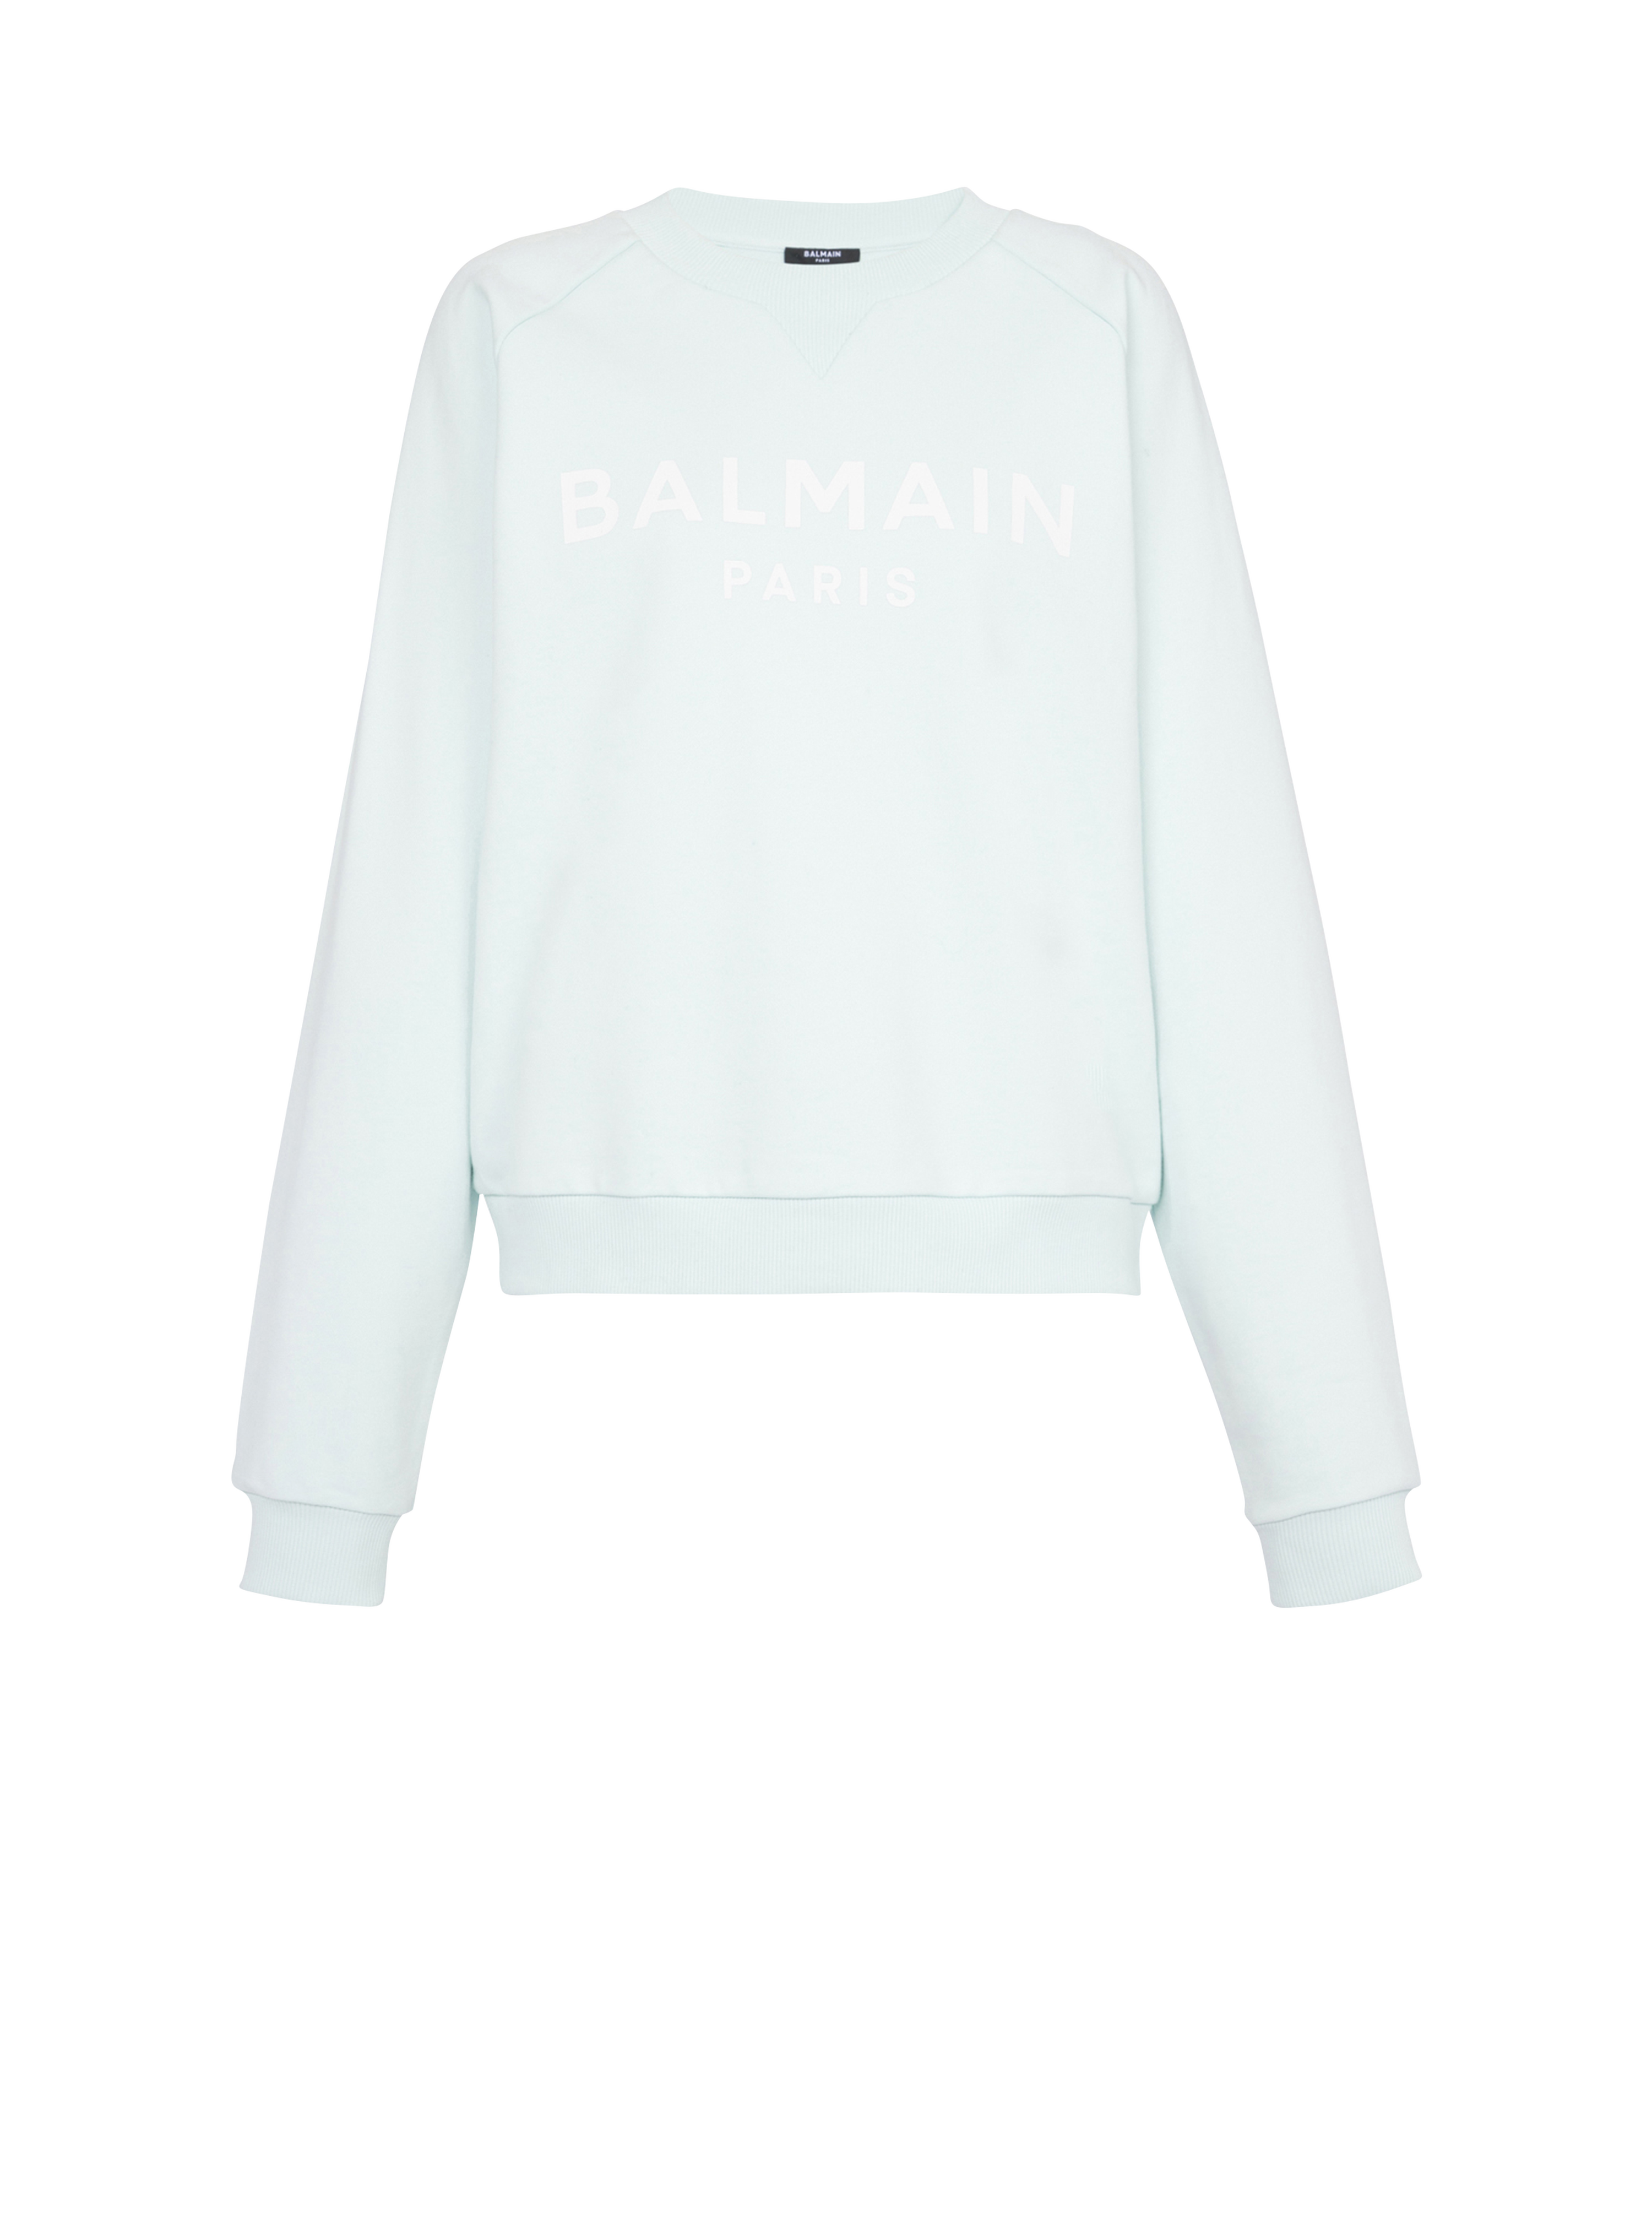 Eco-designed cotton sweatshirt with Balmain logo print, green